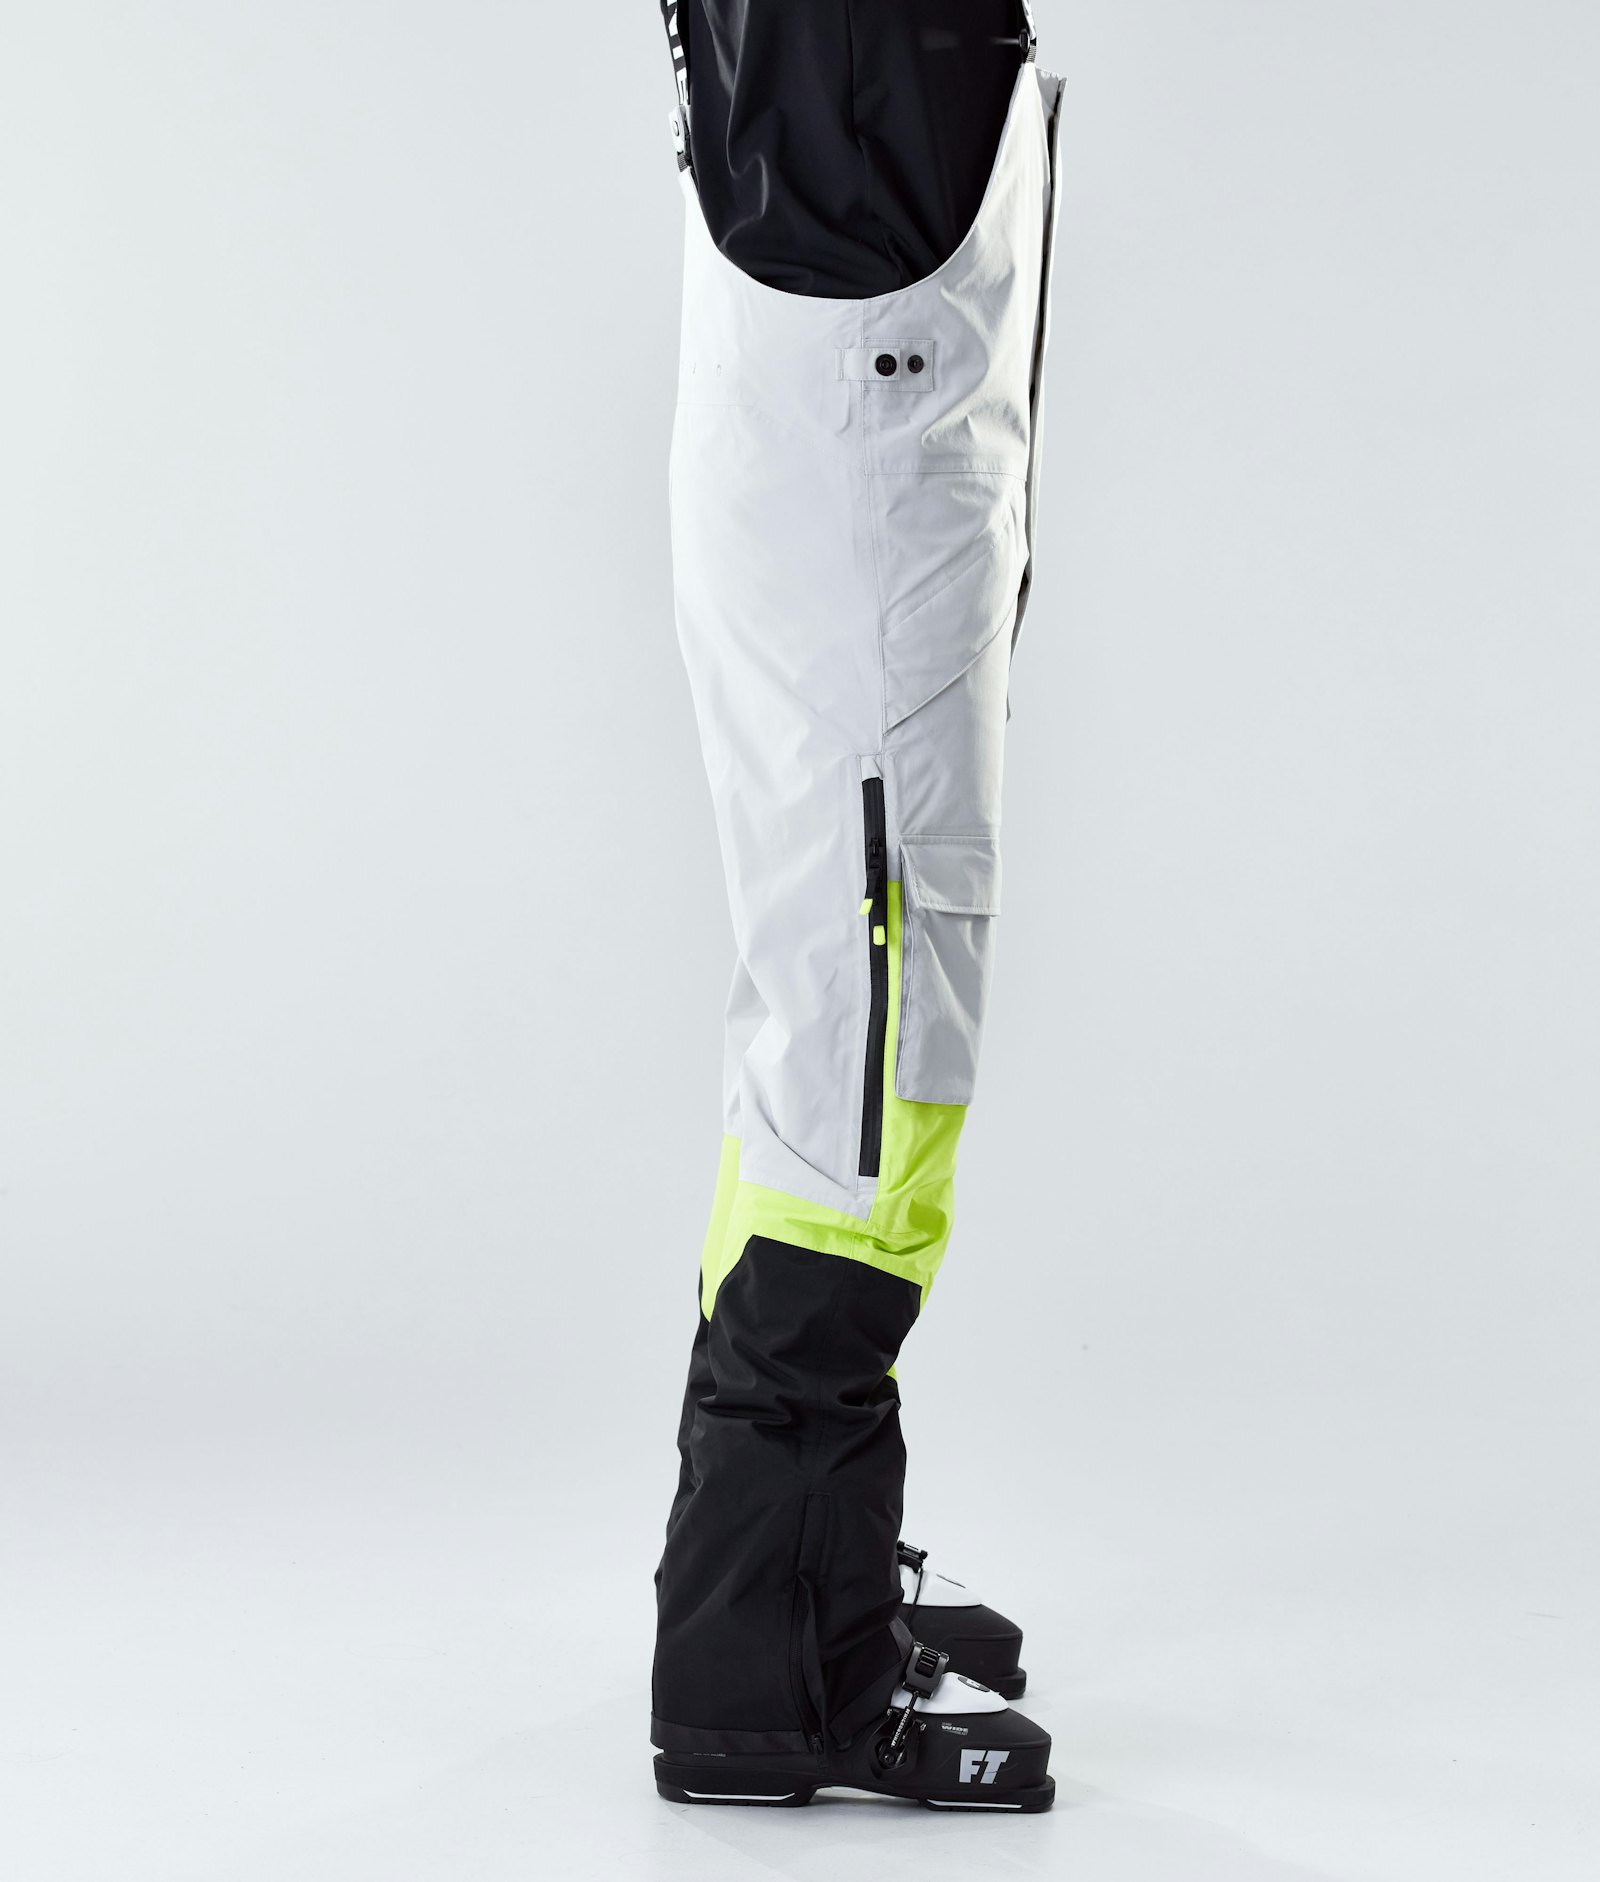 Fawk 2020 Ski Pants Men Light Grey/Neon Yellow/Black